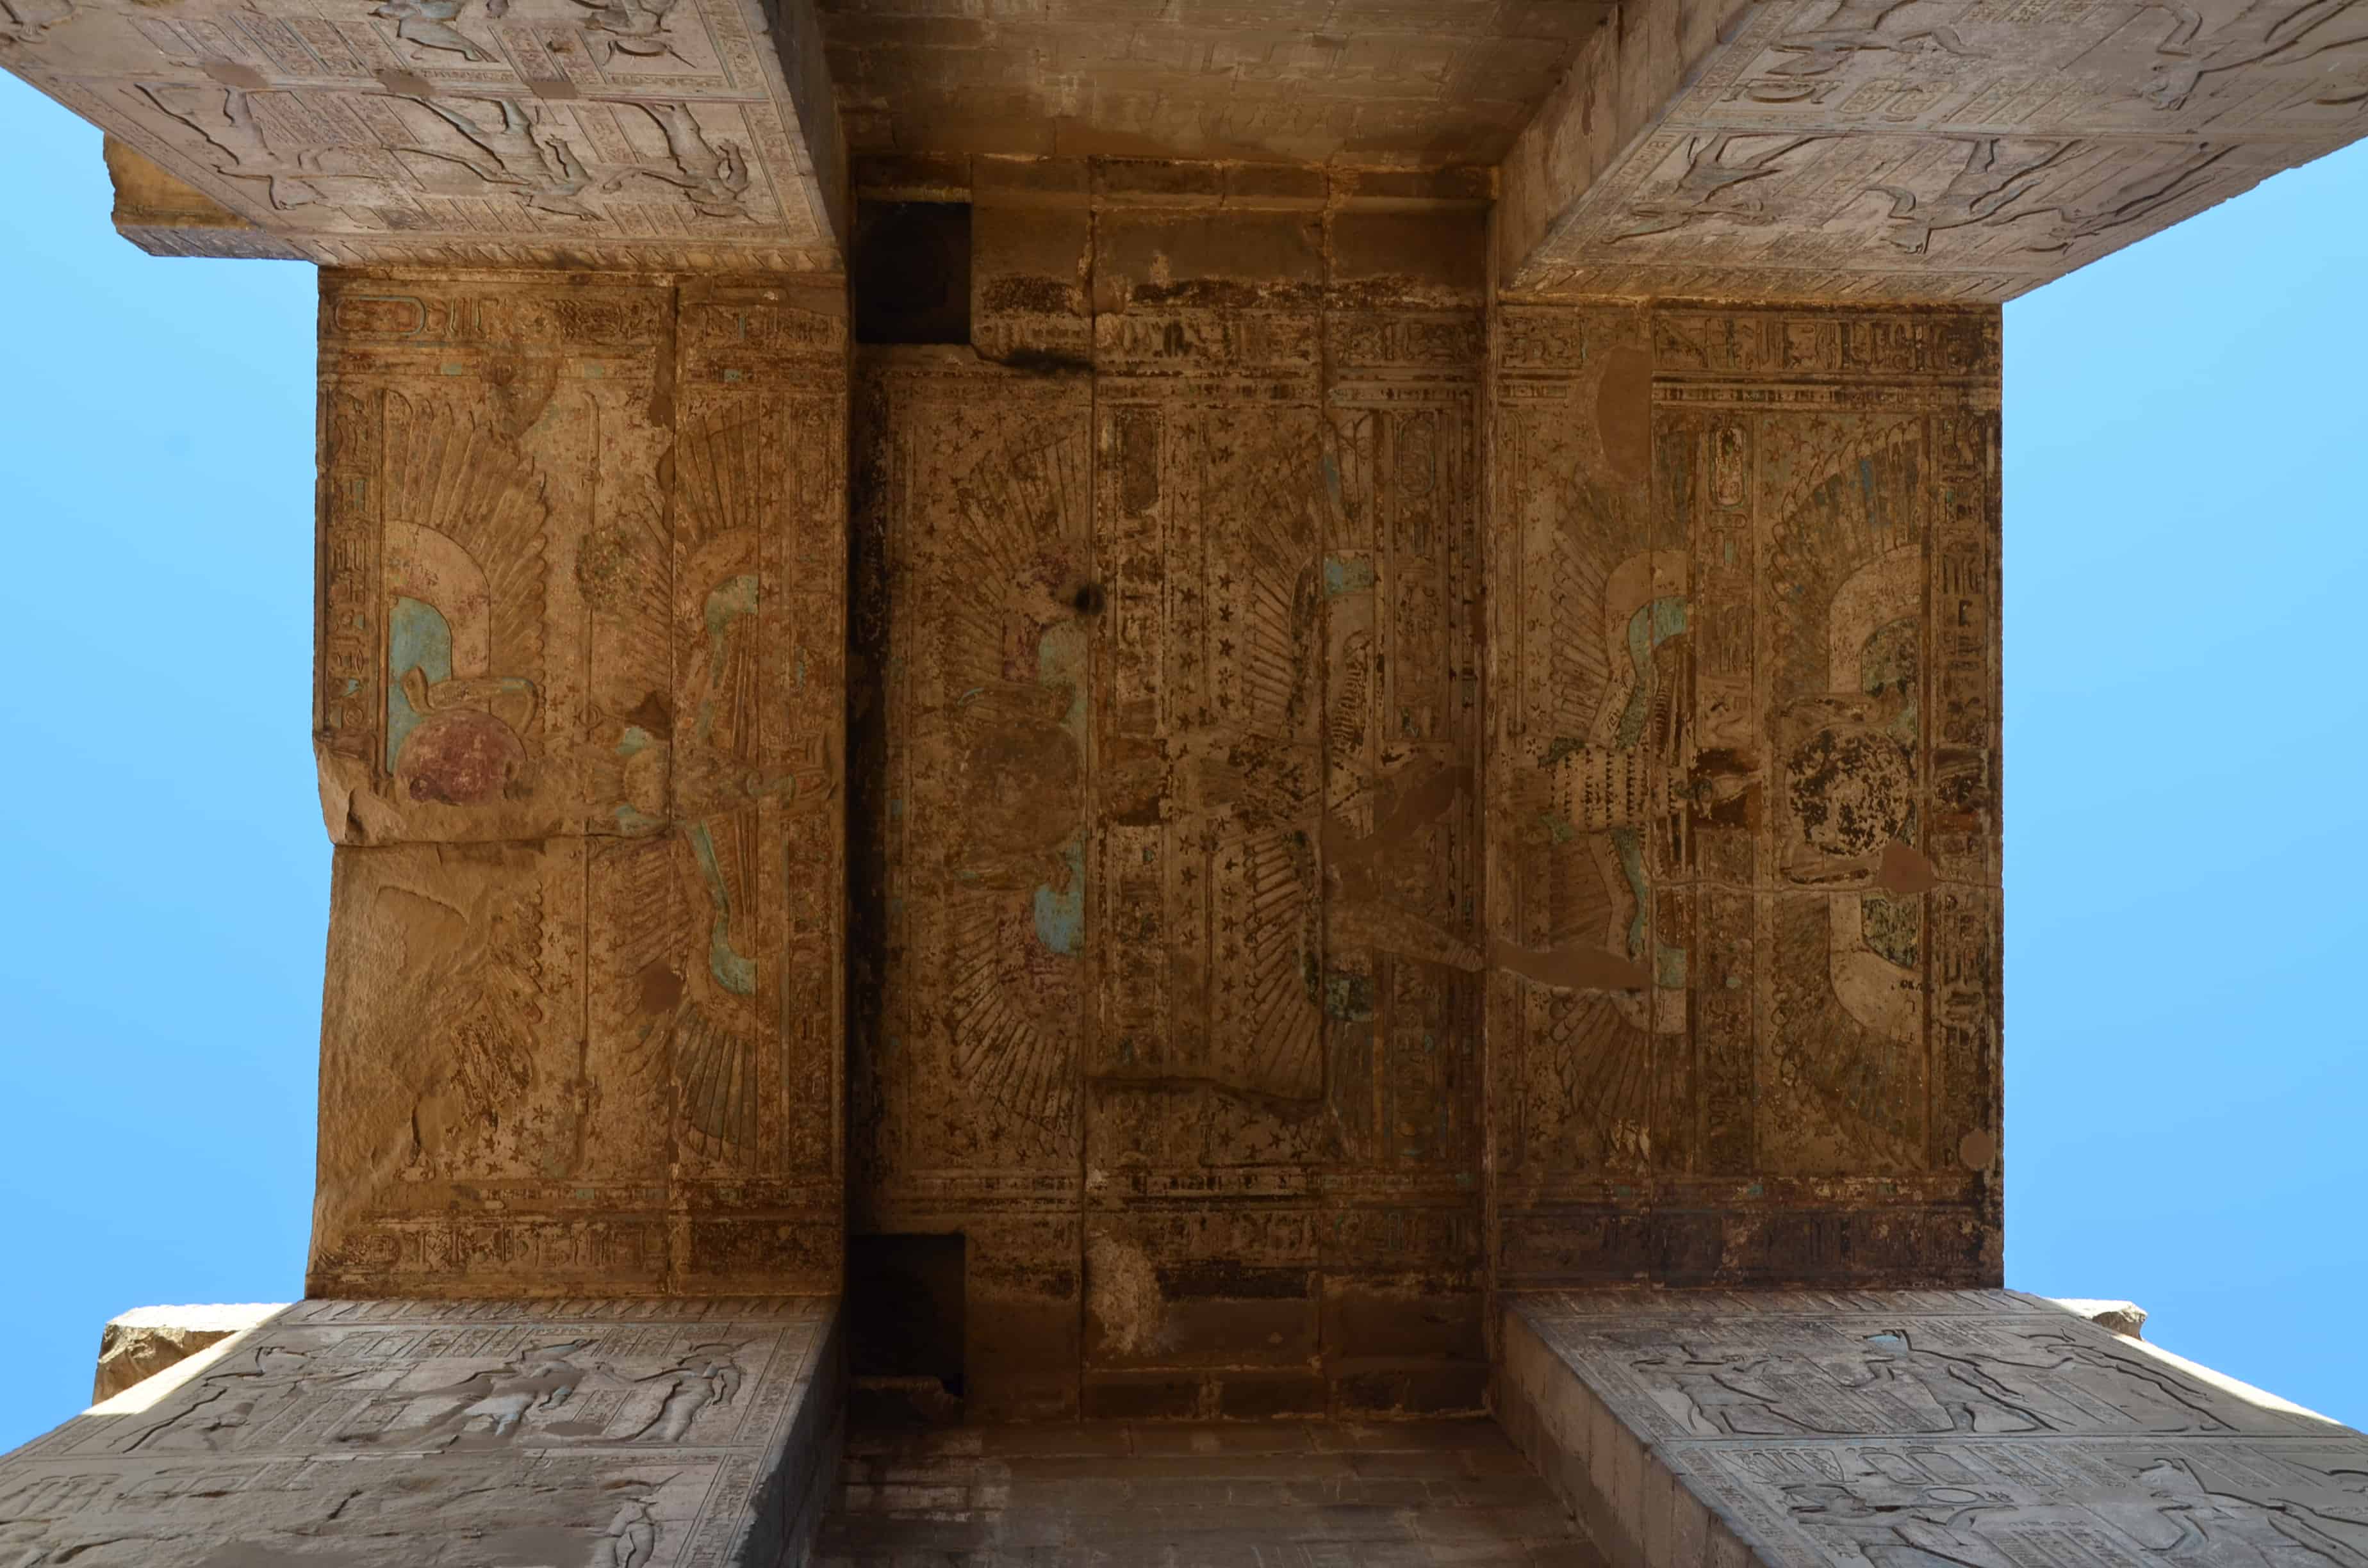 Entrance at the Temple of Edfu, Egypt